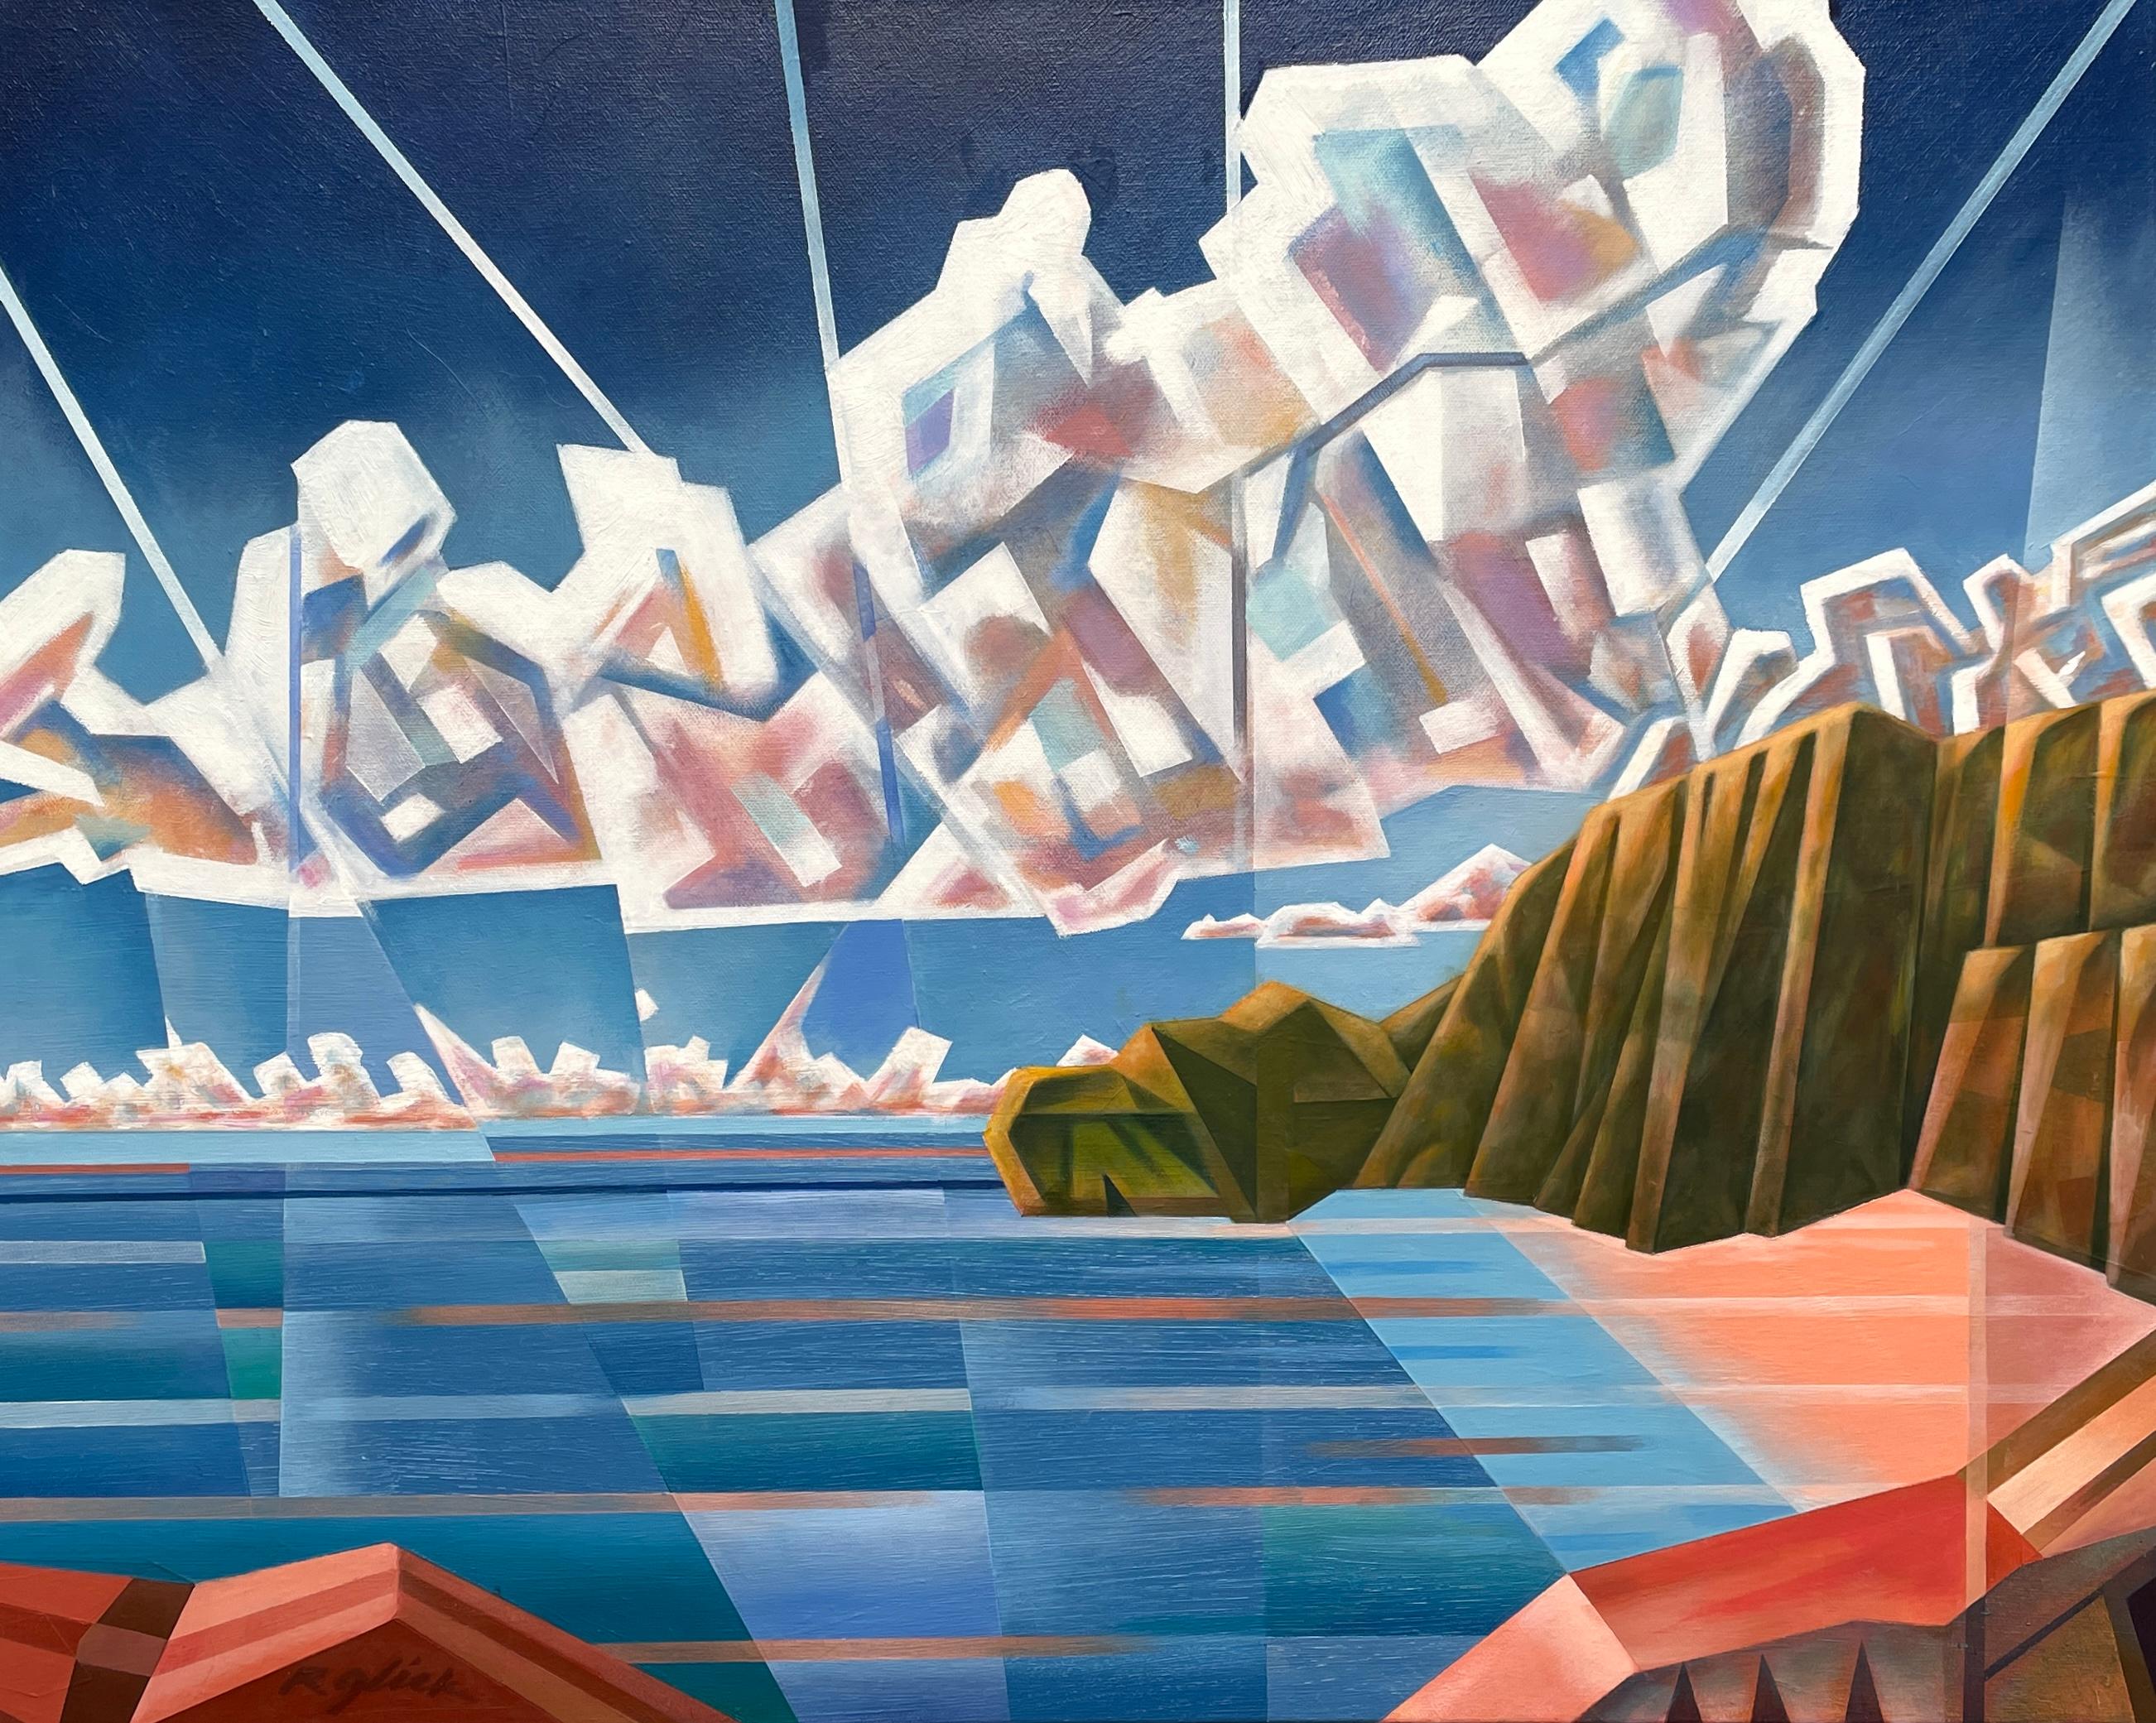 Holiday Cove' par Robert Theck - Paysage marin abstrait vibrant - Cubiste analytique - Contemporain Painting par Robert Glick